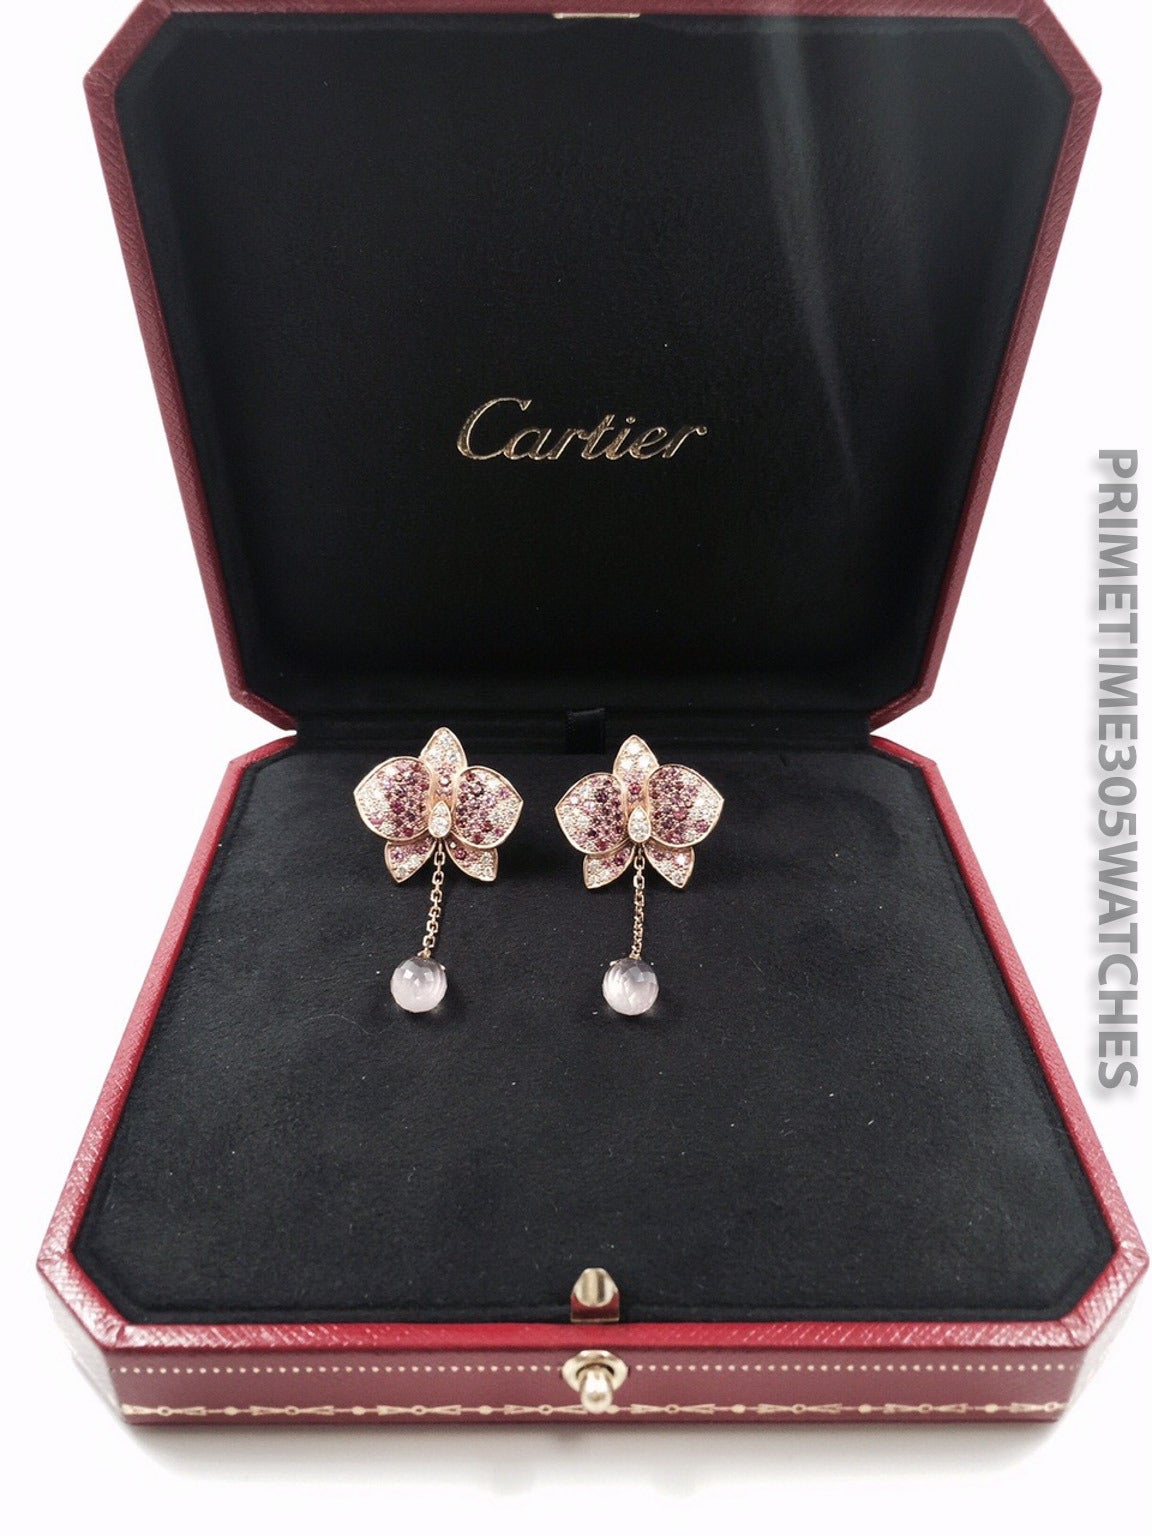 Cartier CARESSE D'ORCHIDÉES 18K Pink Gold Earrings set with Diamonds, Pale Pink Sapphires, Rhodolite Garnets, dark Pink Tourmalines and a Single Pink Quartz Briolette Cut Drop.